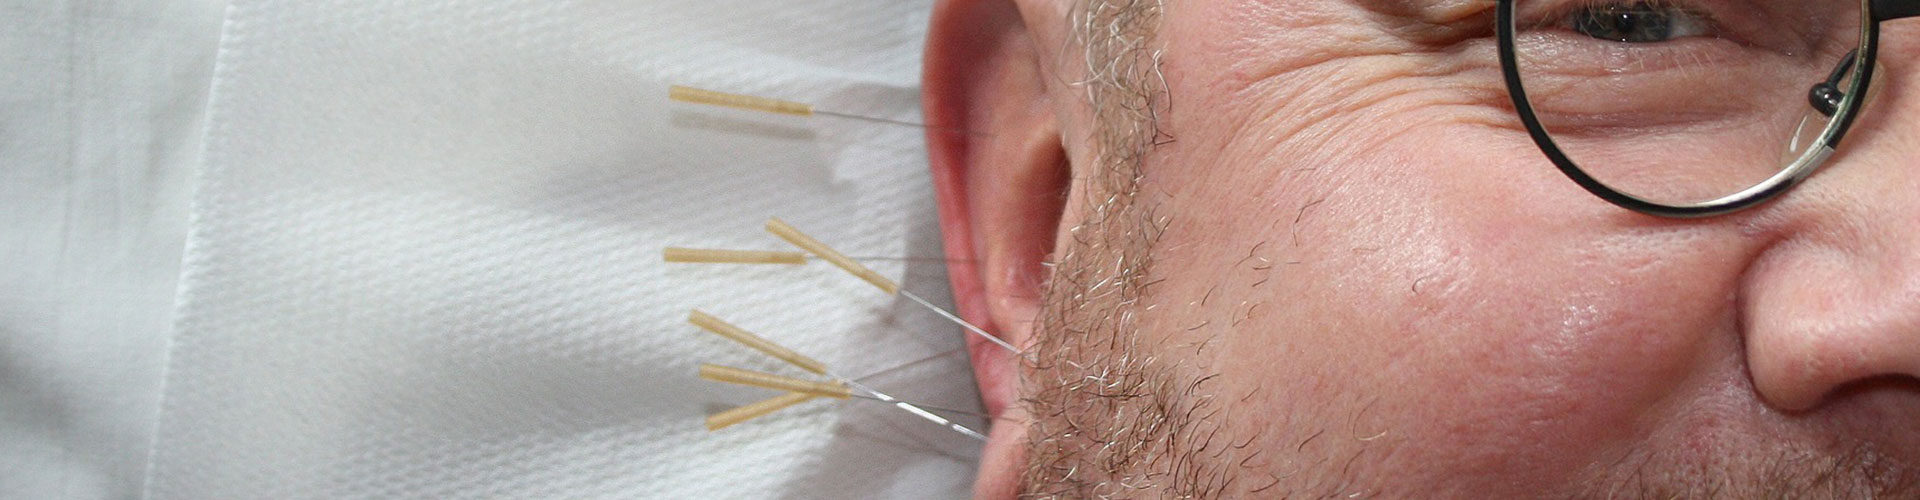 Colorado Springs Acupuncture Treatments | Listening Heart Medicines